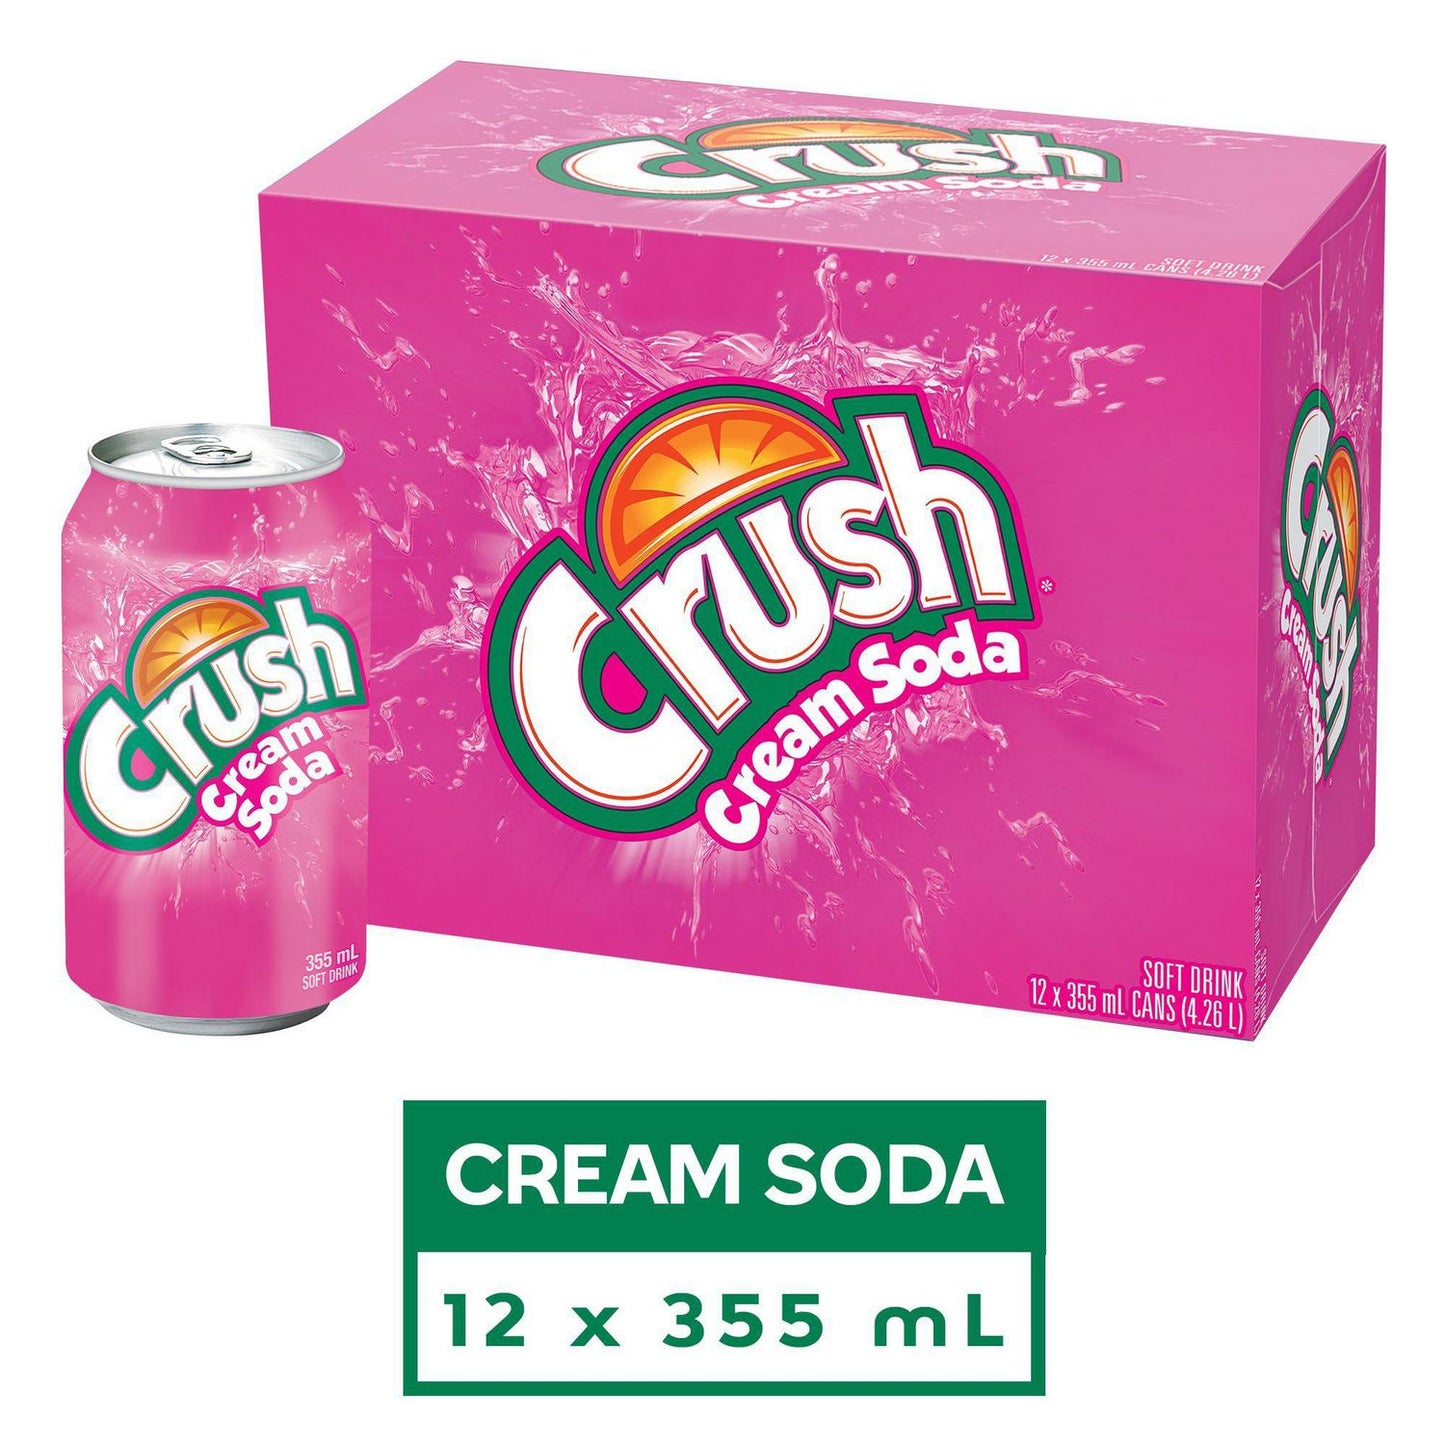 Crush Cream Soda, 12 x 355 mL cans